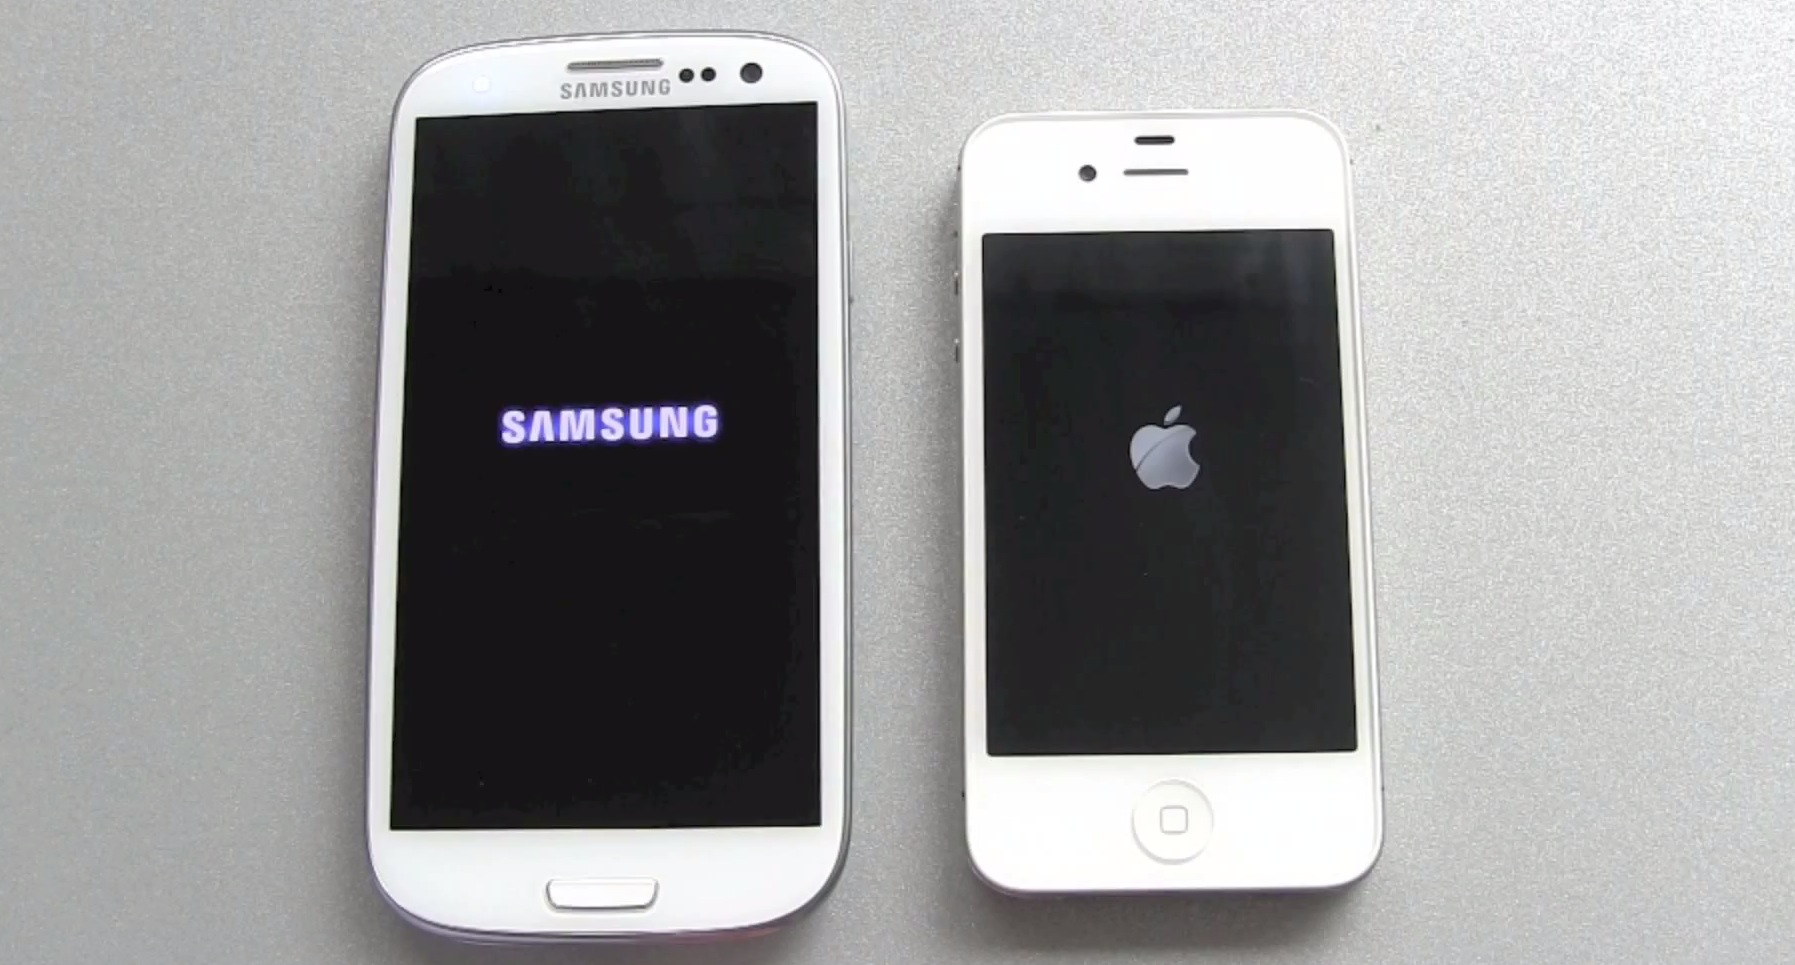 Samsung Galaxy S3 vs iPhone 4S Bootrennen – Technikfaultier